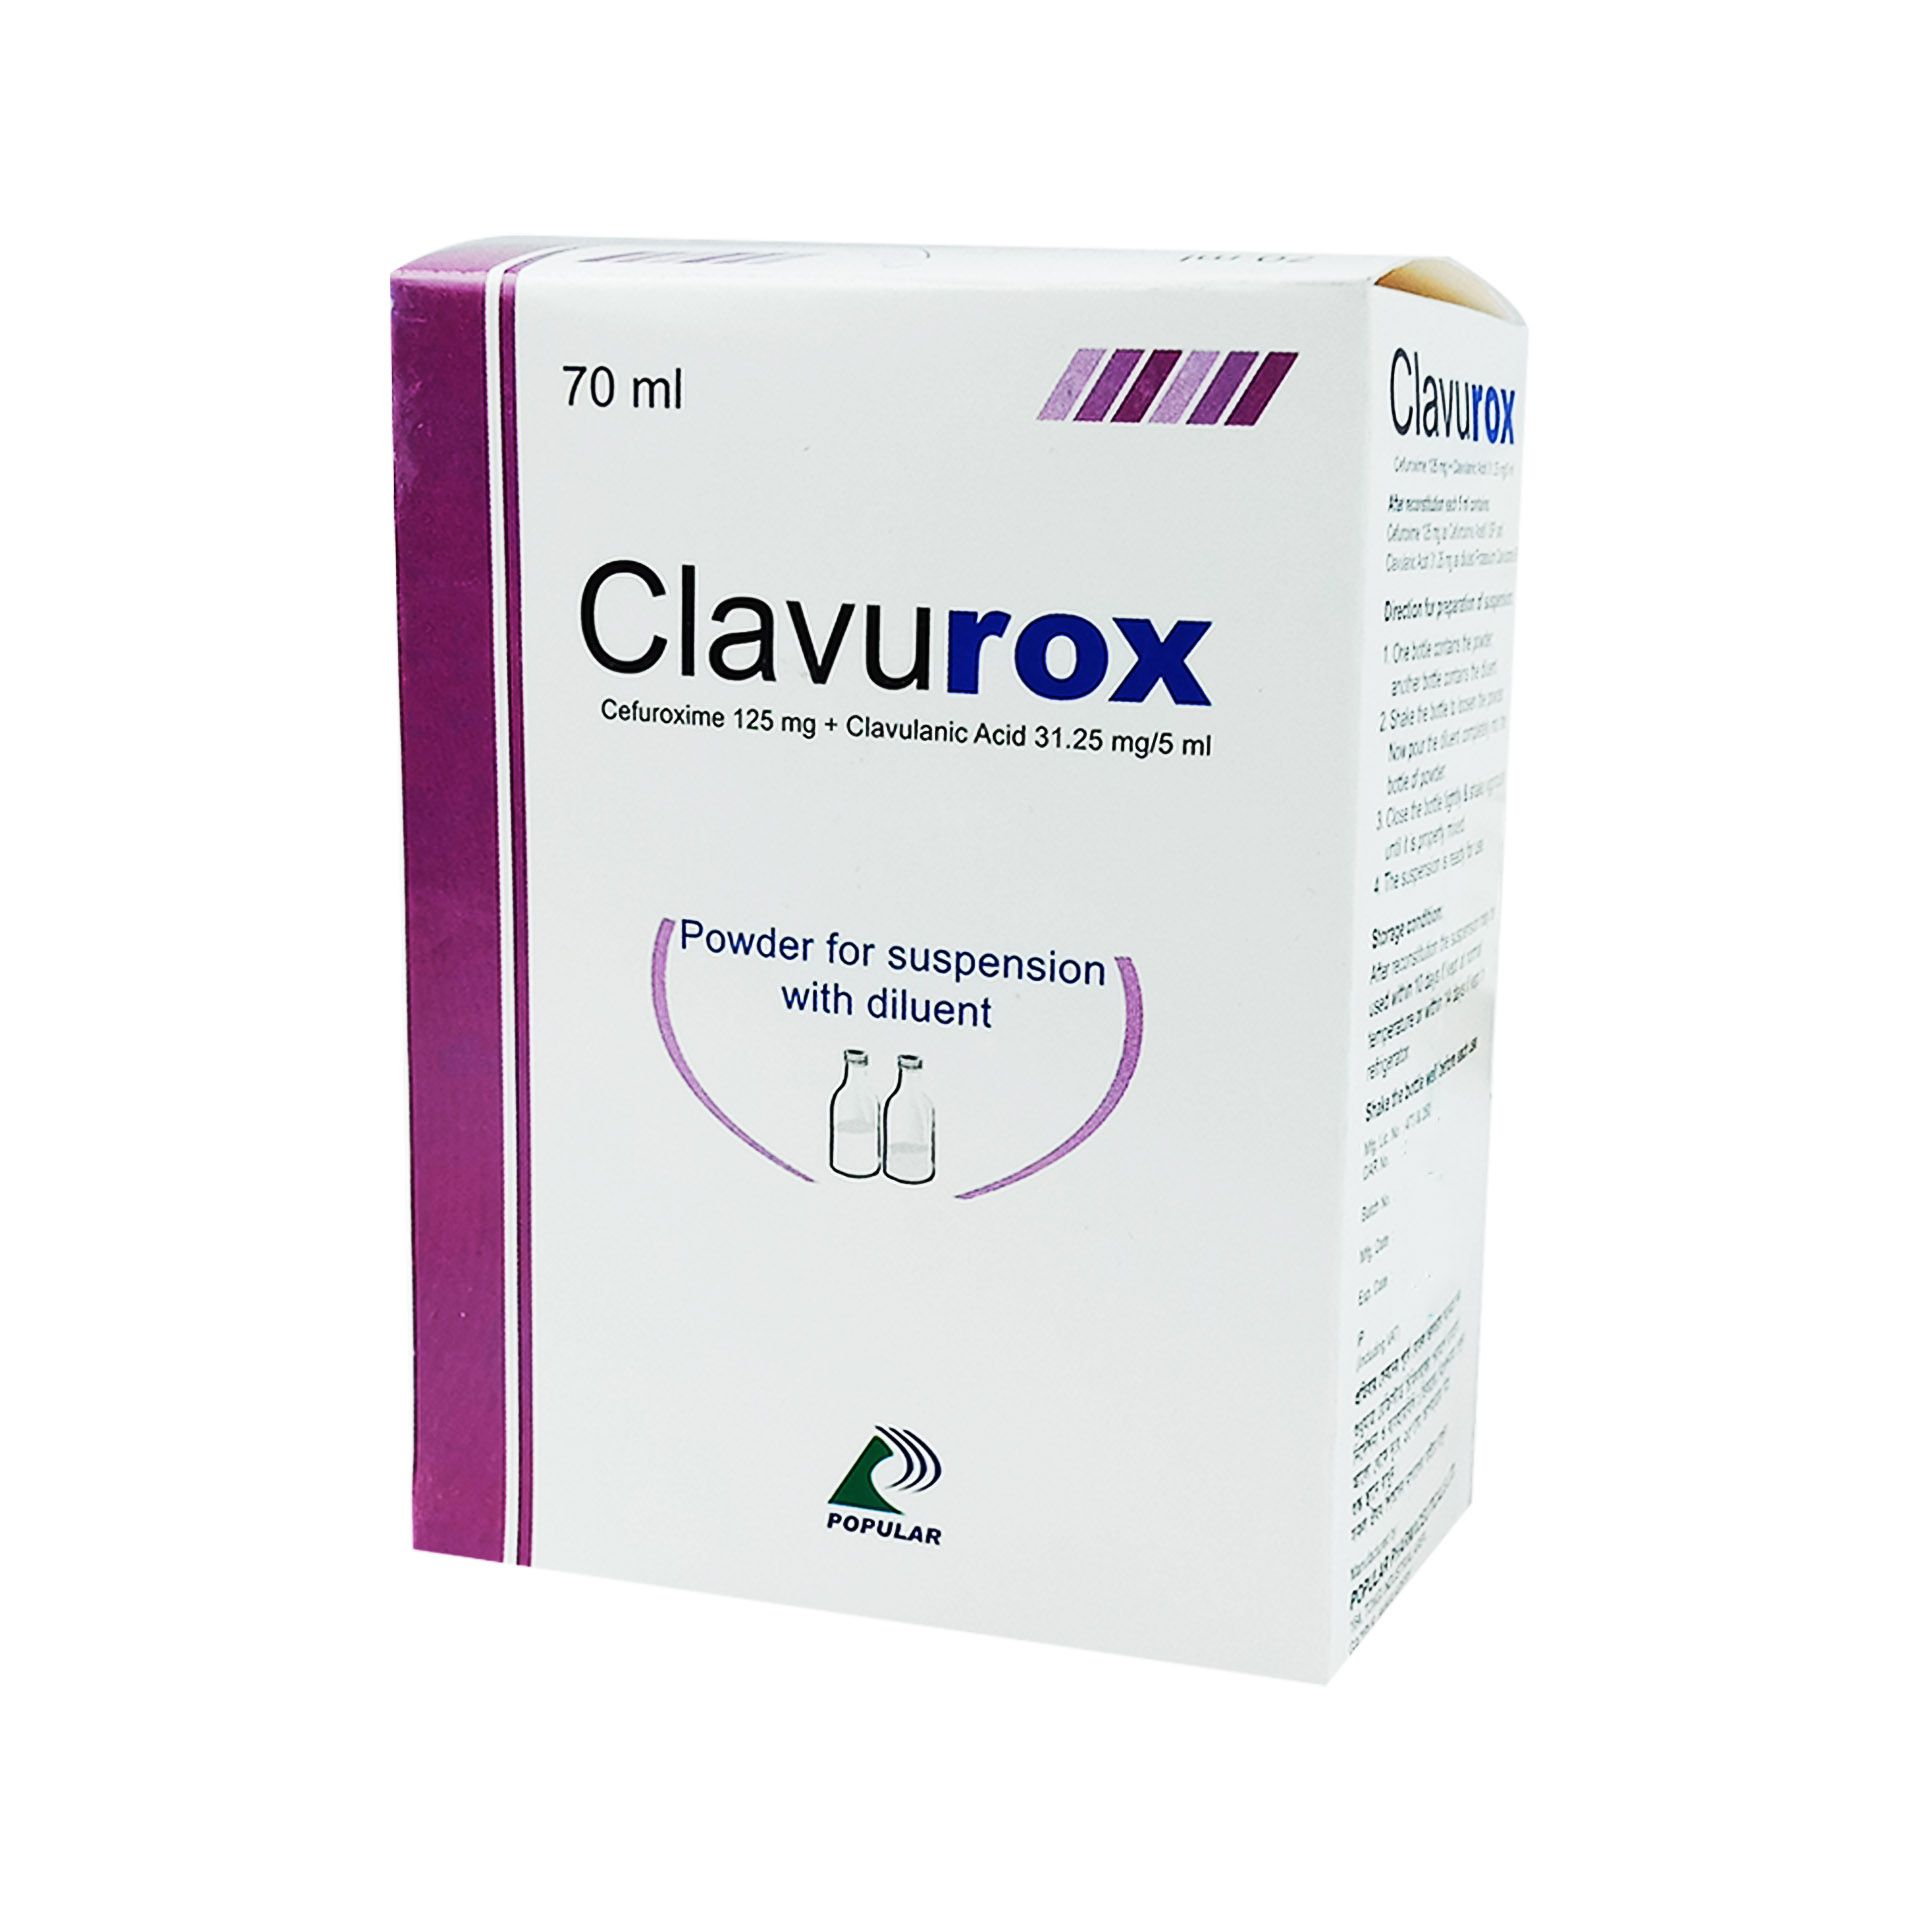 Clavurox 125mg+31.25mg/5ml Powder for Suspension